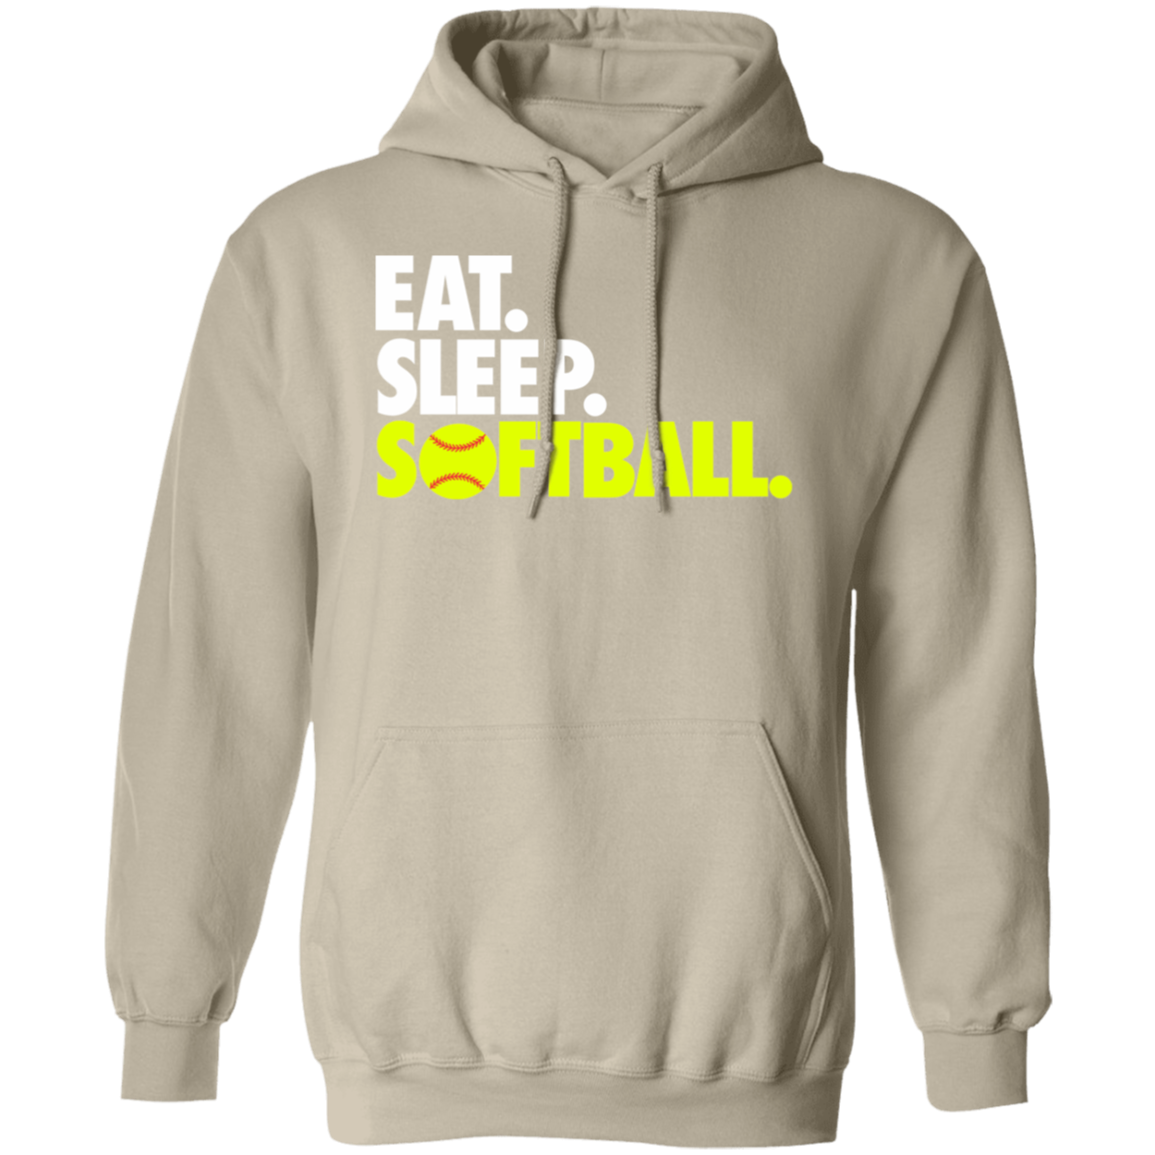 Eat Sleep Softball Premium Unisex Hoodies - Game Day Getup